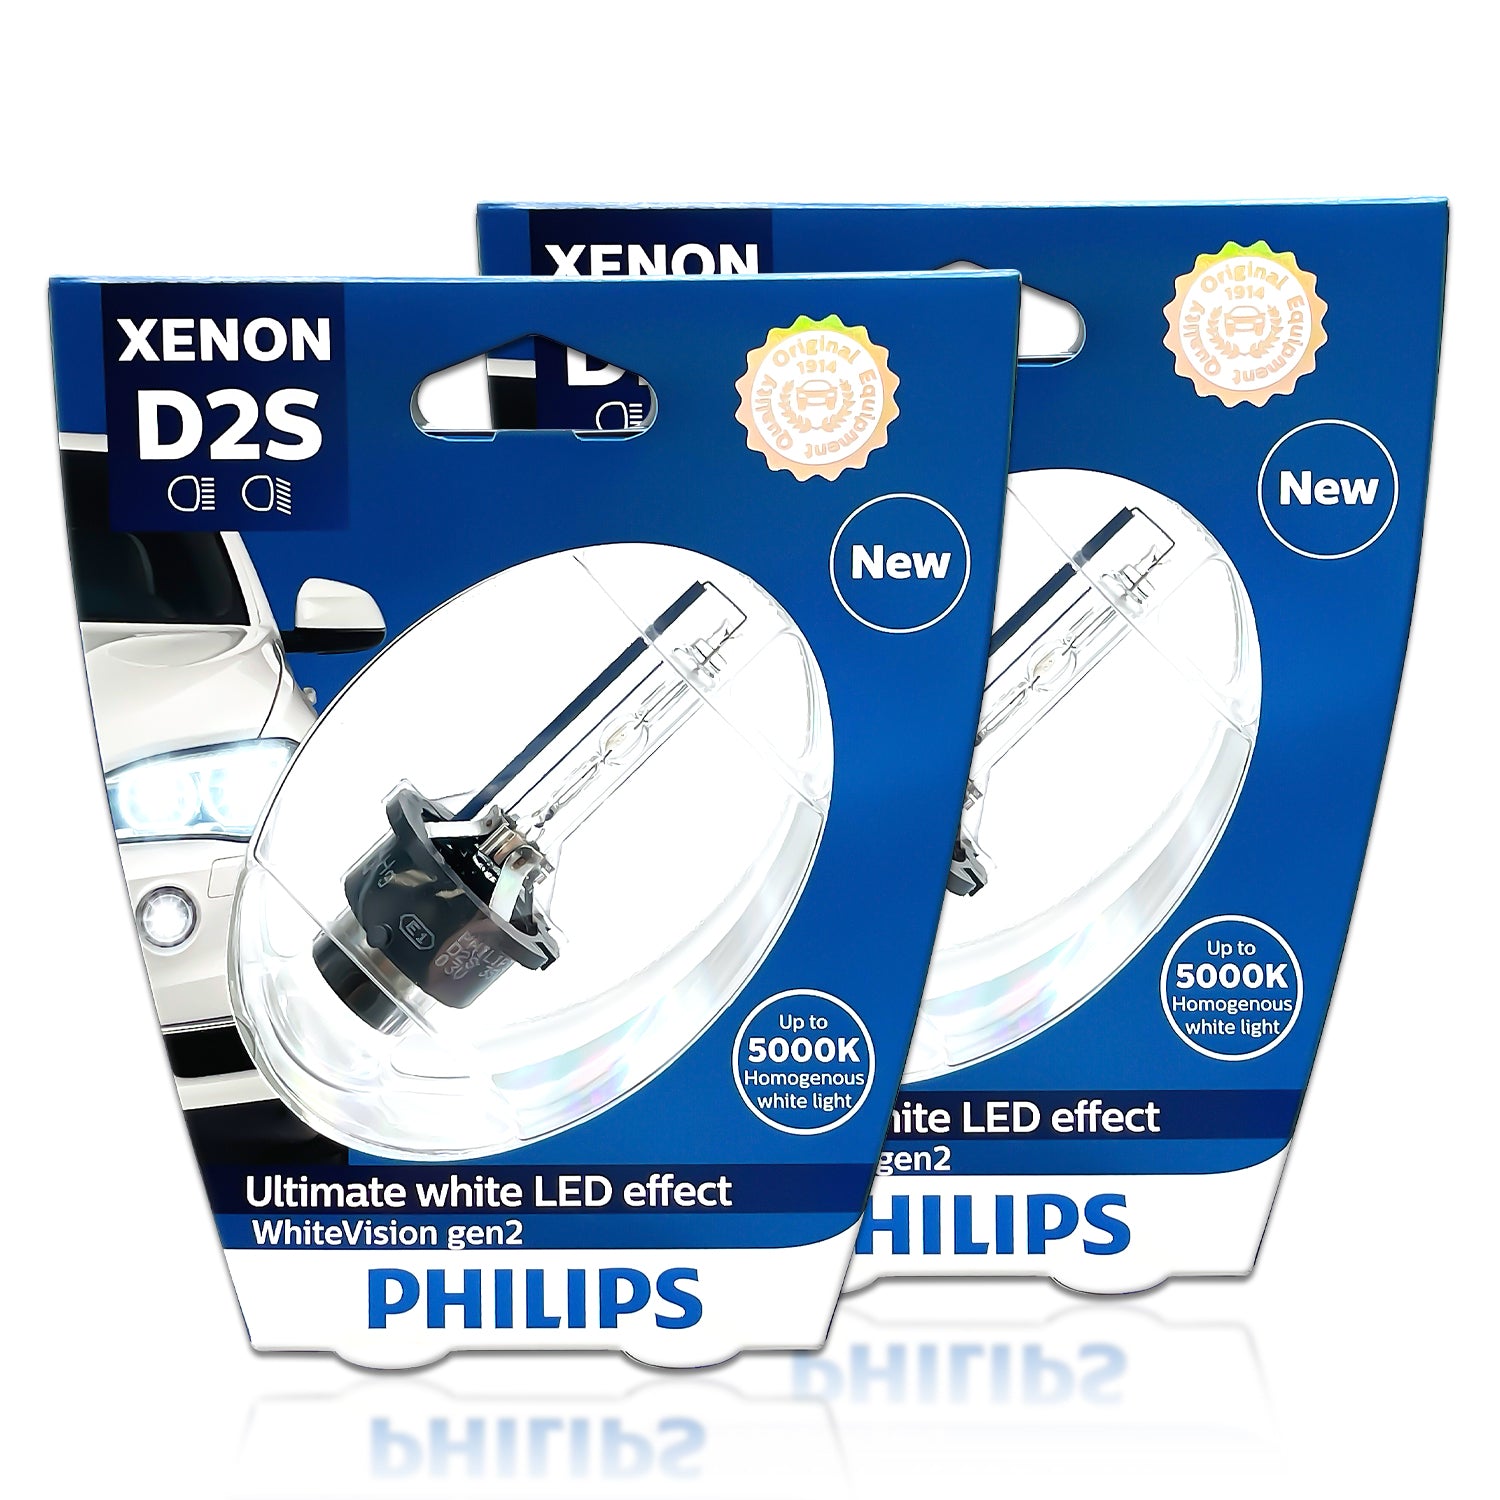 D2S: Philips 85122WHV2C1 WhiteVision Gen2 HID Xenon Bulbs – HID